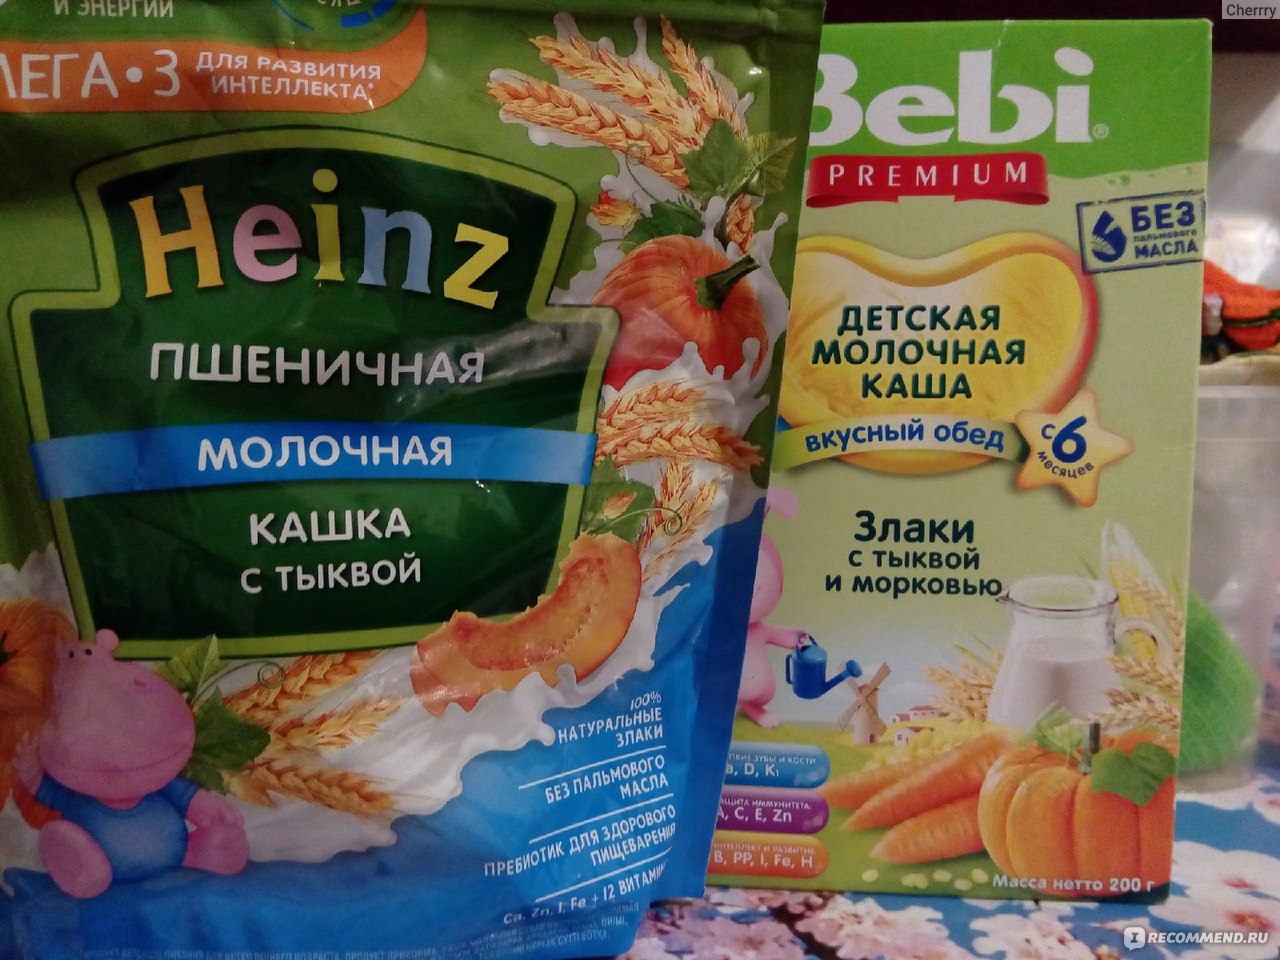 Каша молочная Bebi Premium Злаки тыква-морковь фото